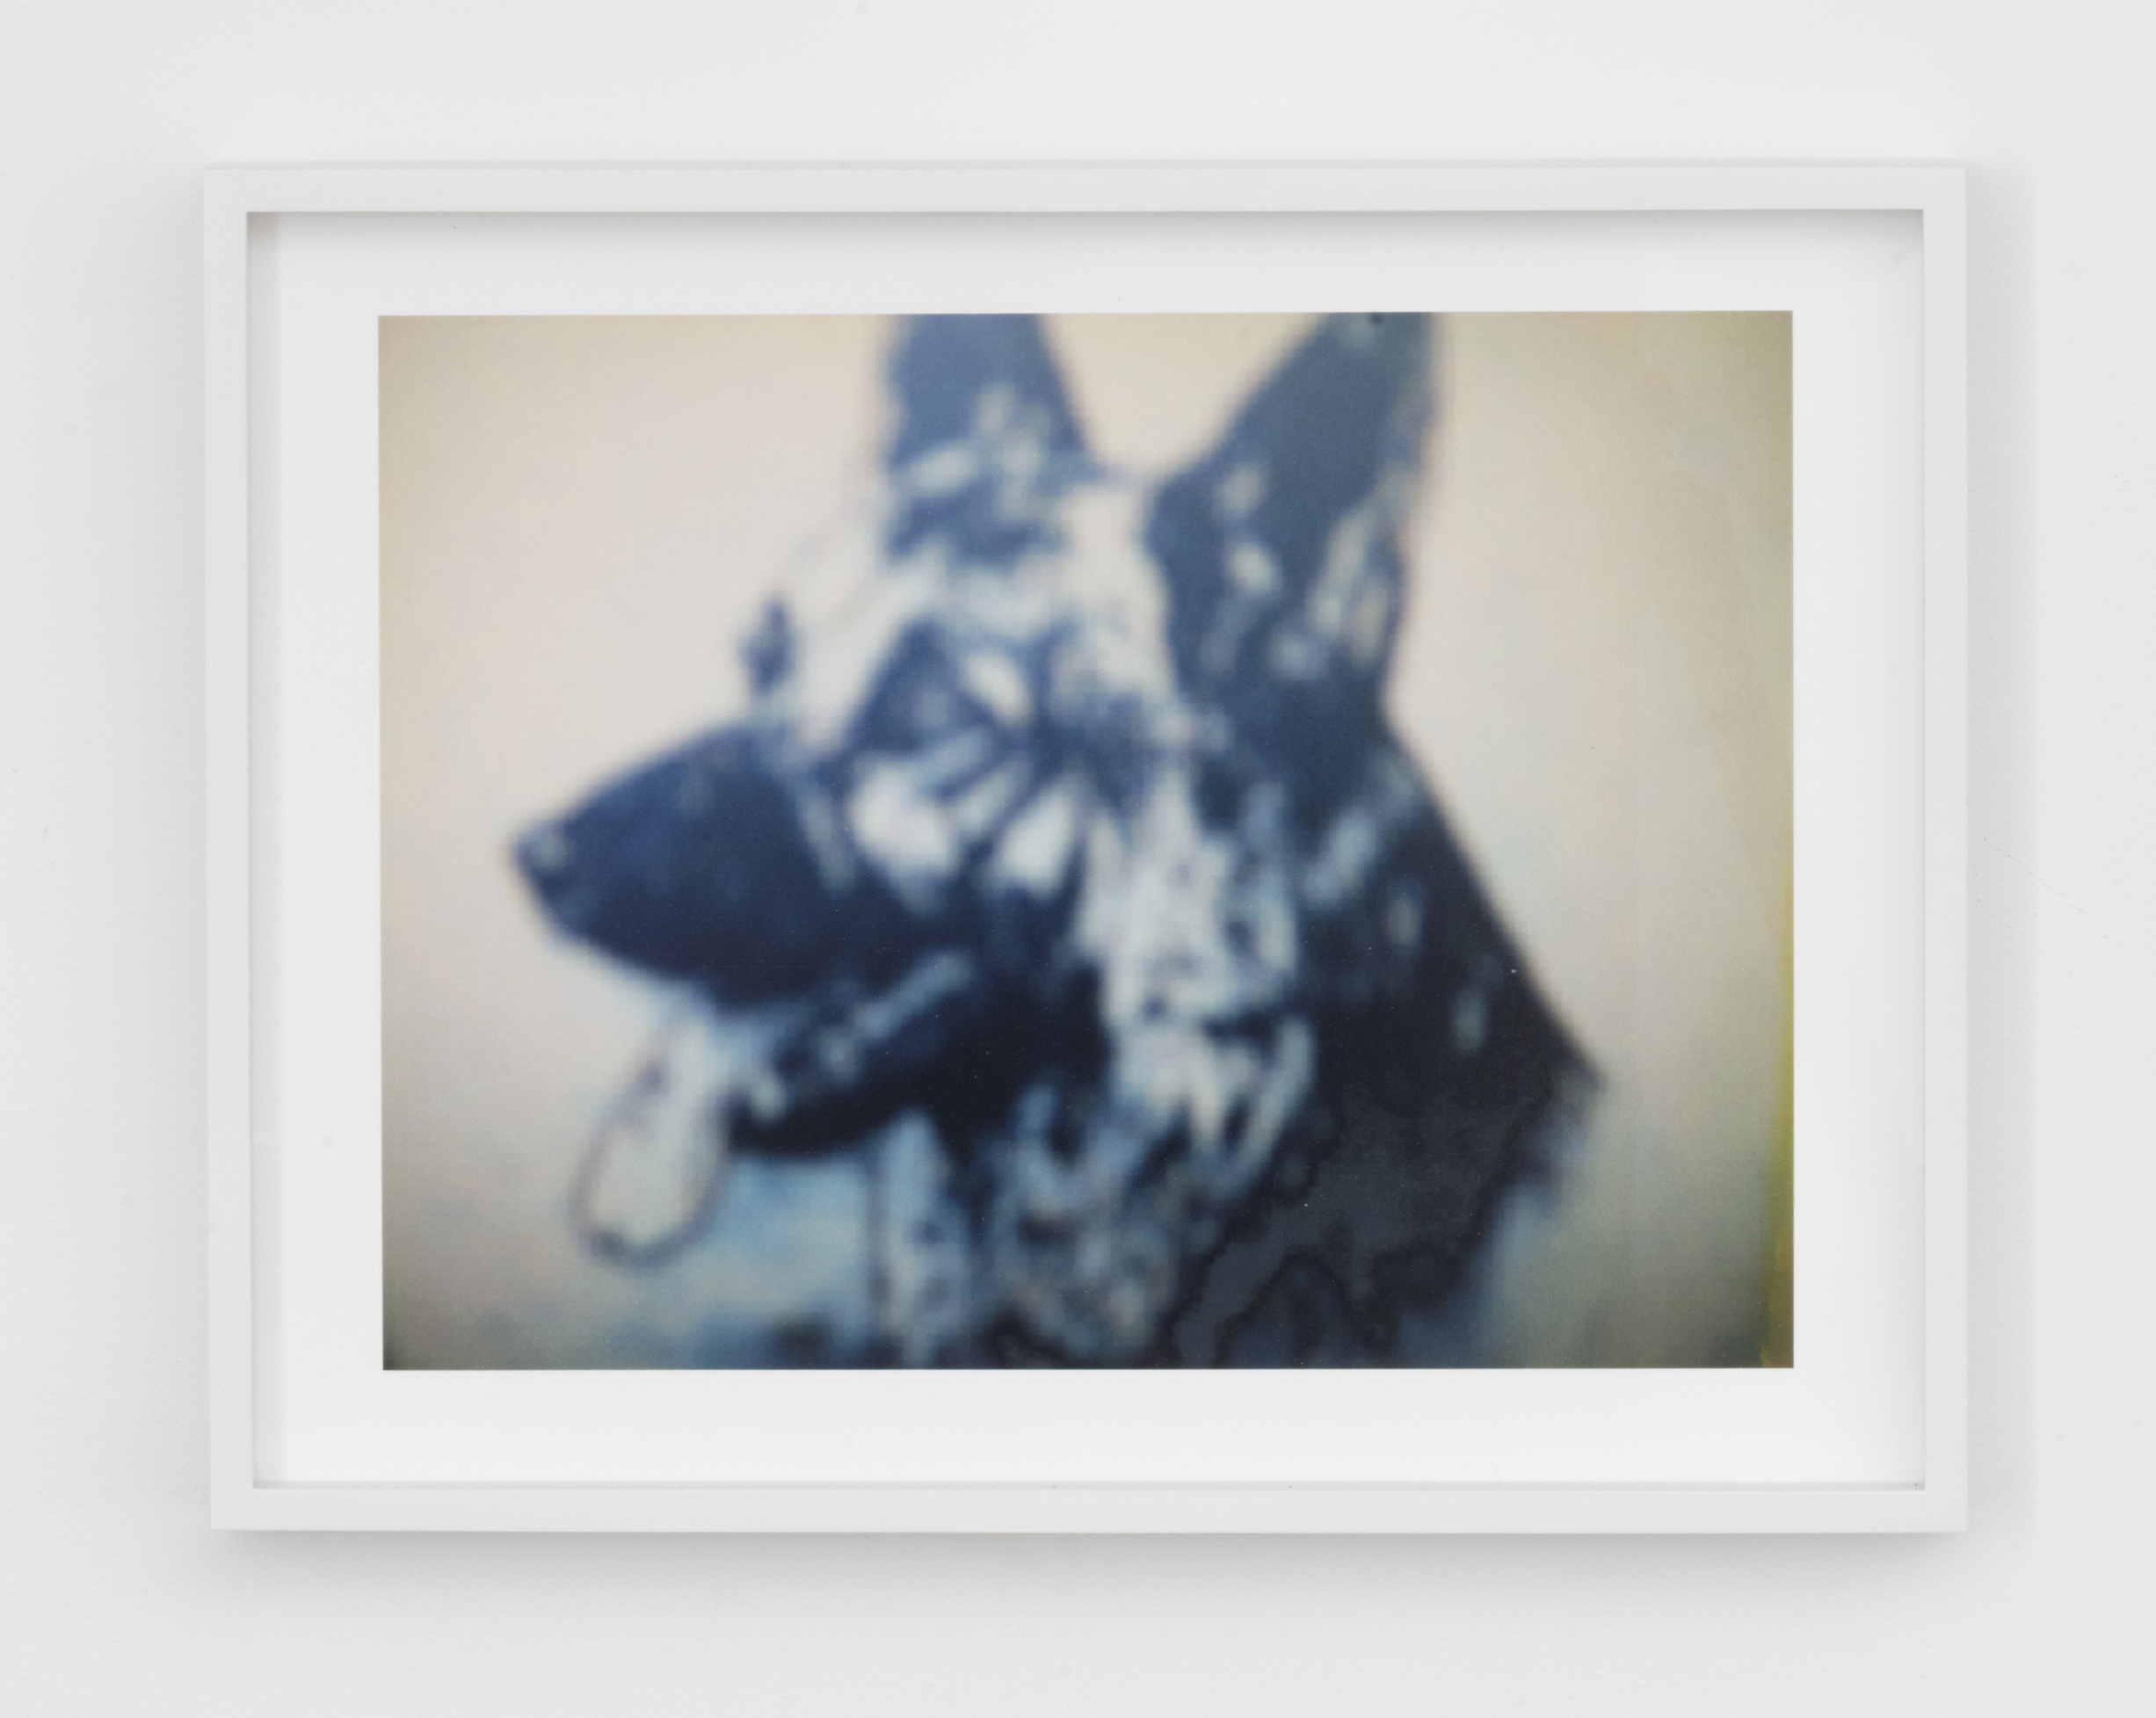 Barbara Ess, Attenti al Cane (Cyan Dog), 2007, archival pigment print, 11.38h x 14.75w in.